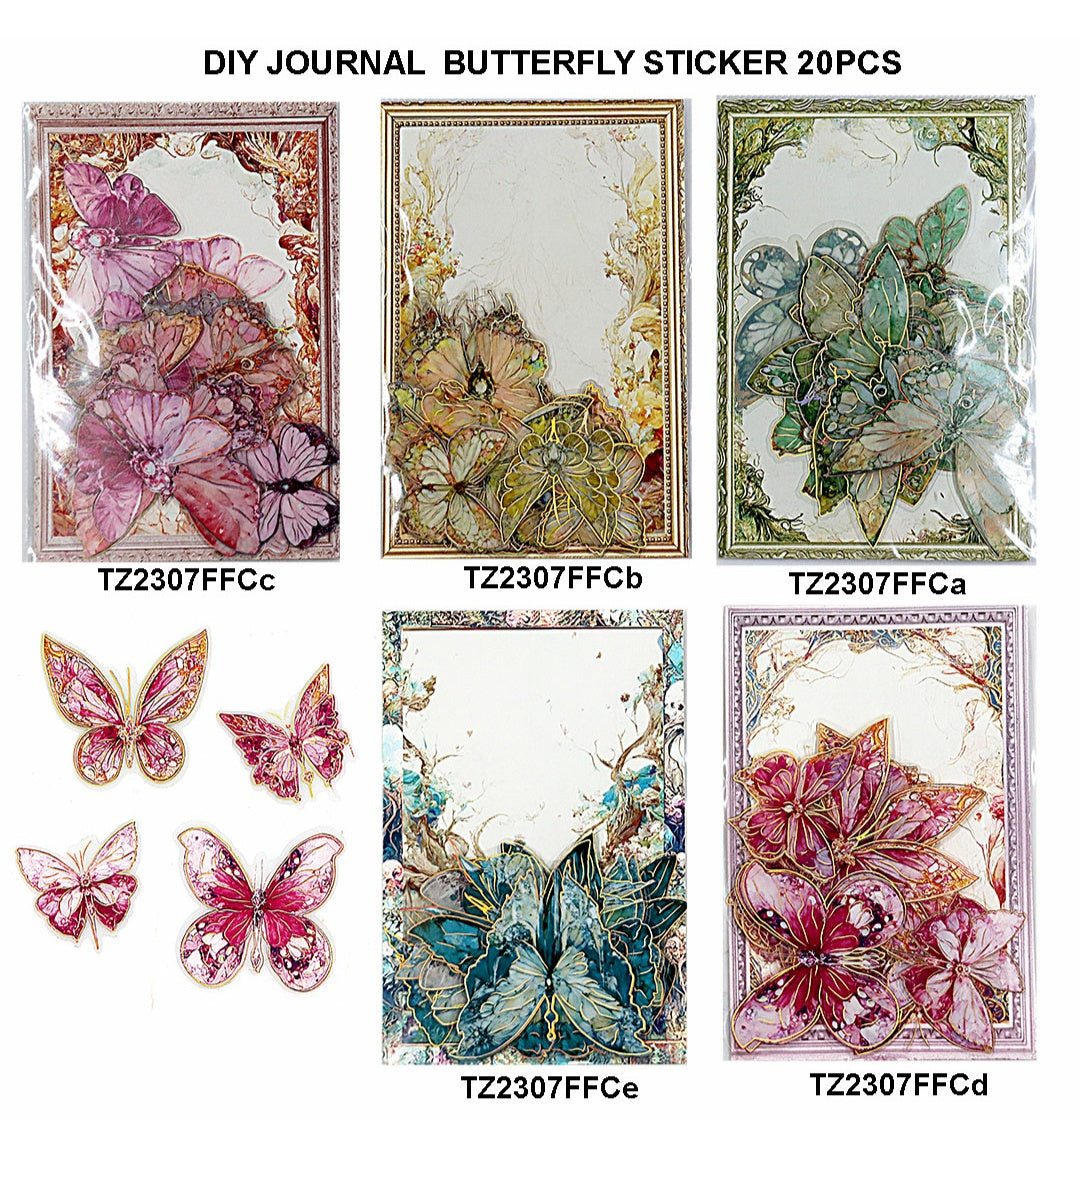 Diy Journal Butterfly Sticker 20Pcs 298 Tz2307Ffc | INKARTO